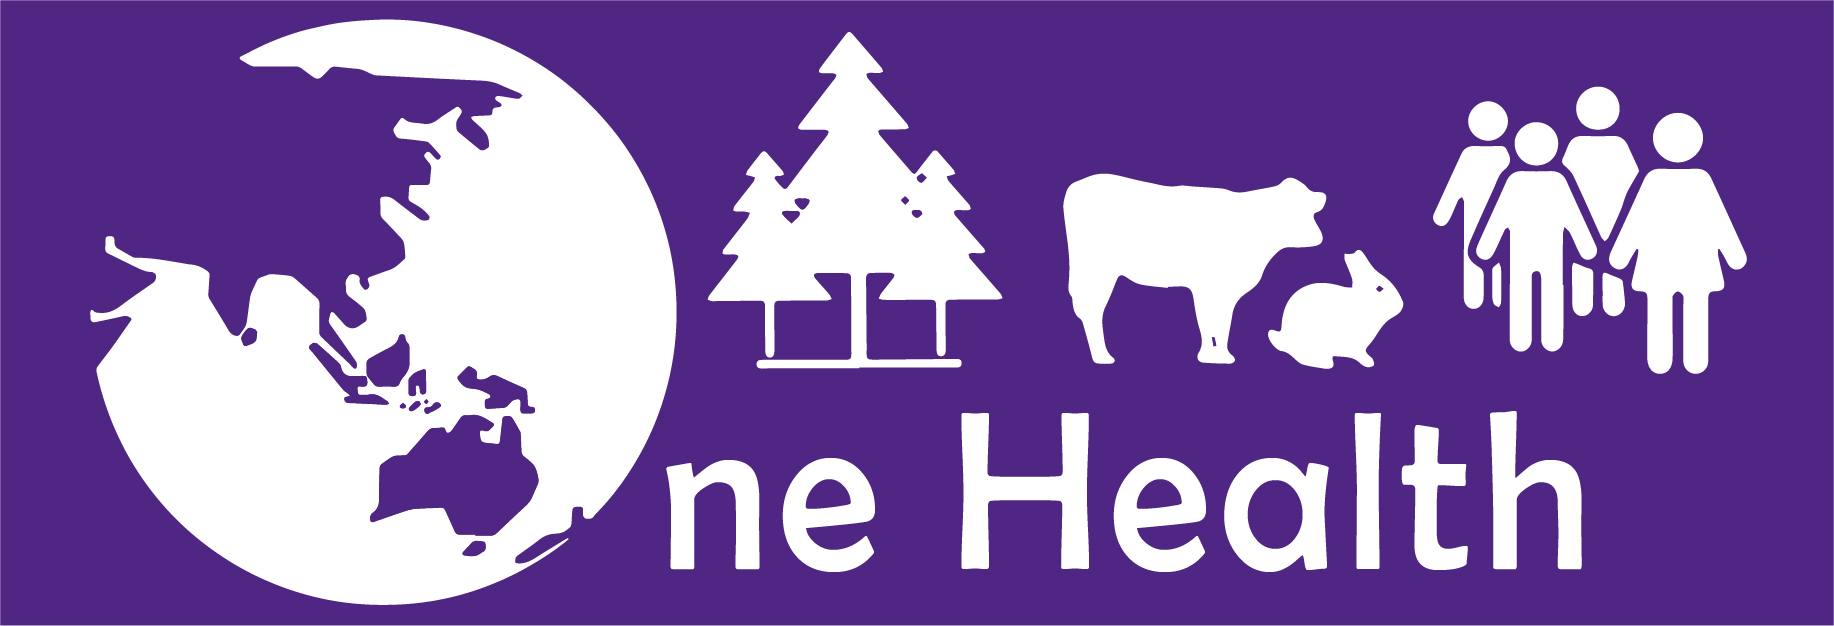 one-health-banner-880x300.jpg